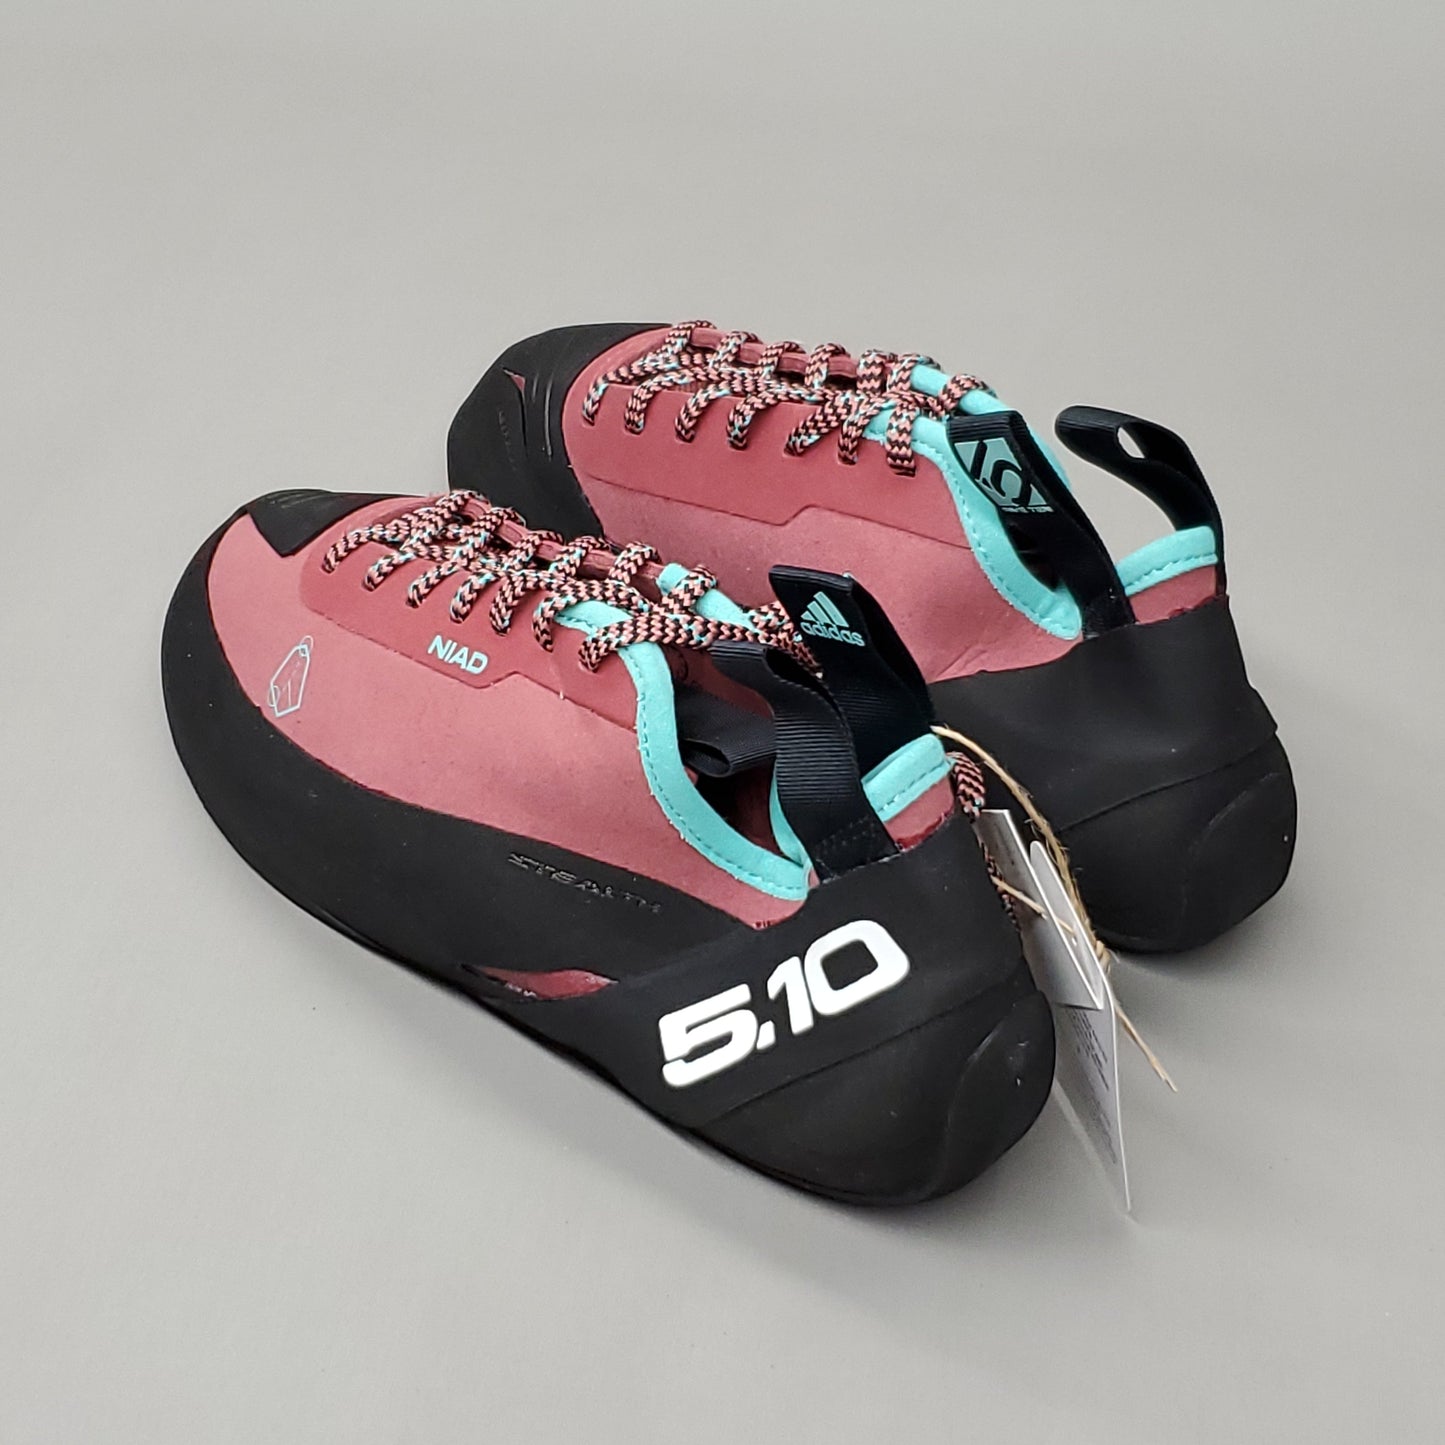 ADIDAS Five Ten Niad Lace W Climbing Shoes Women's Sz 10.5 Crew Red FW2874 (New)